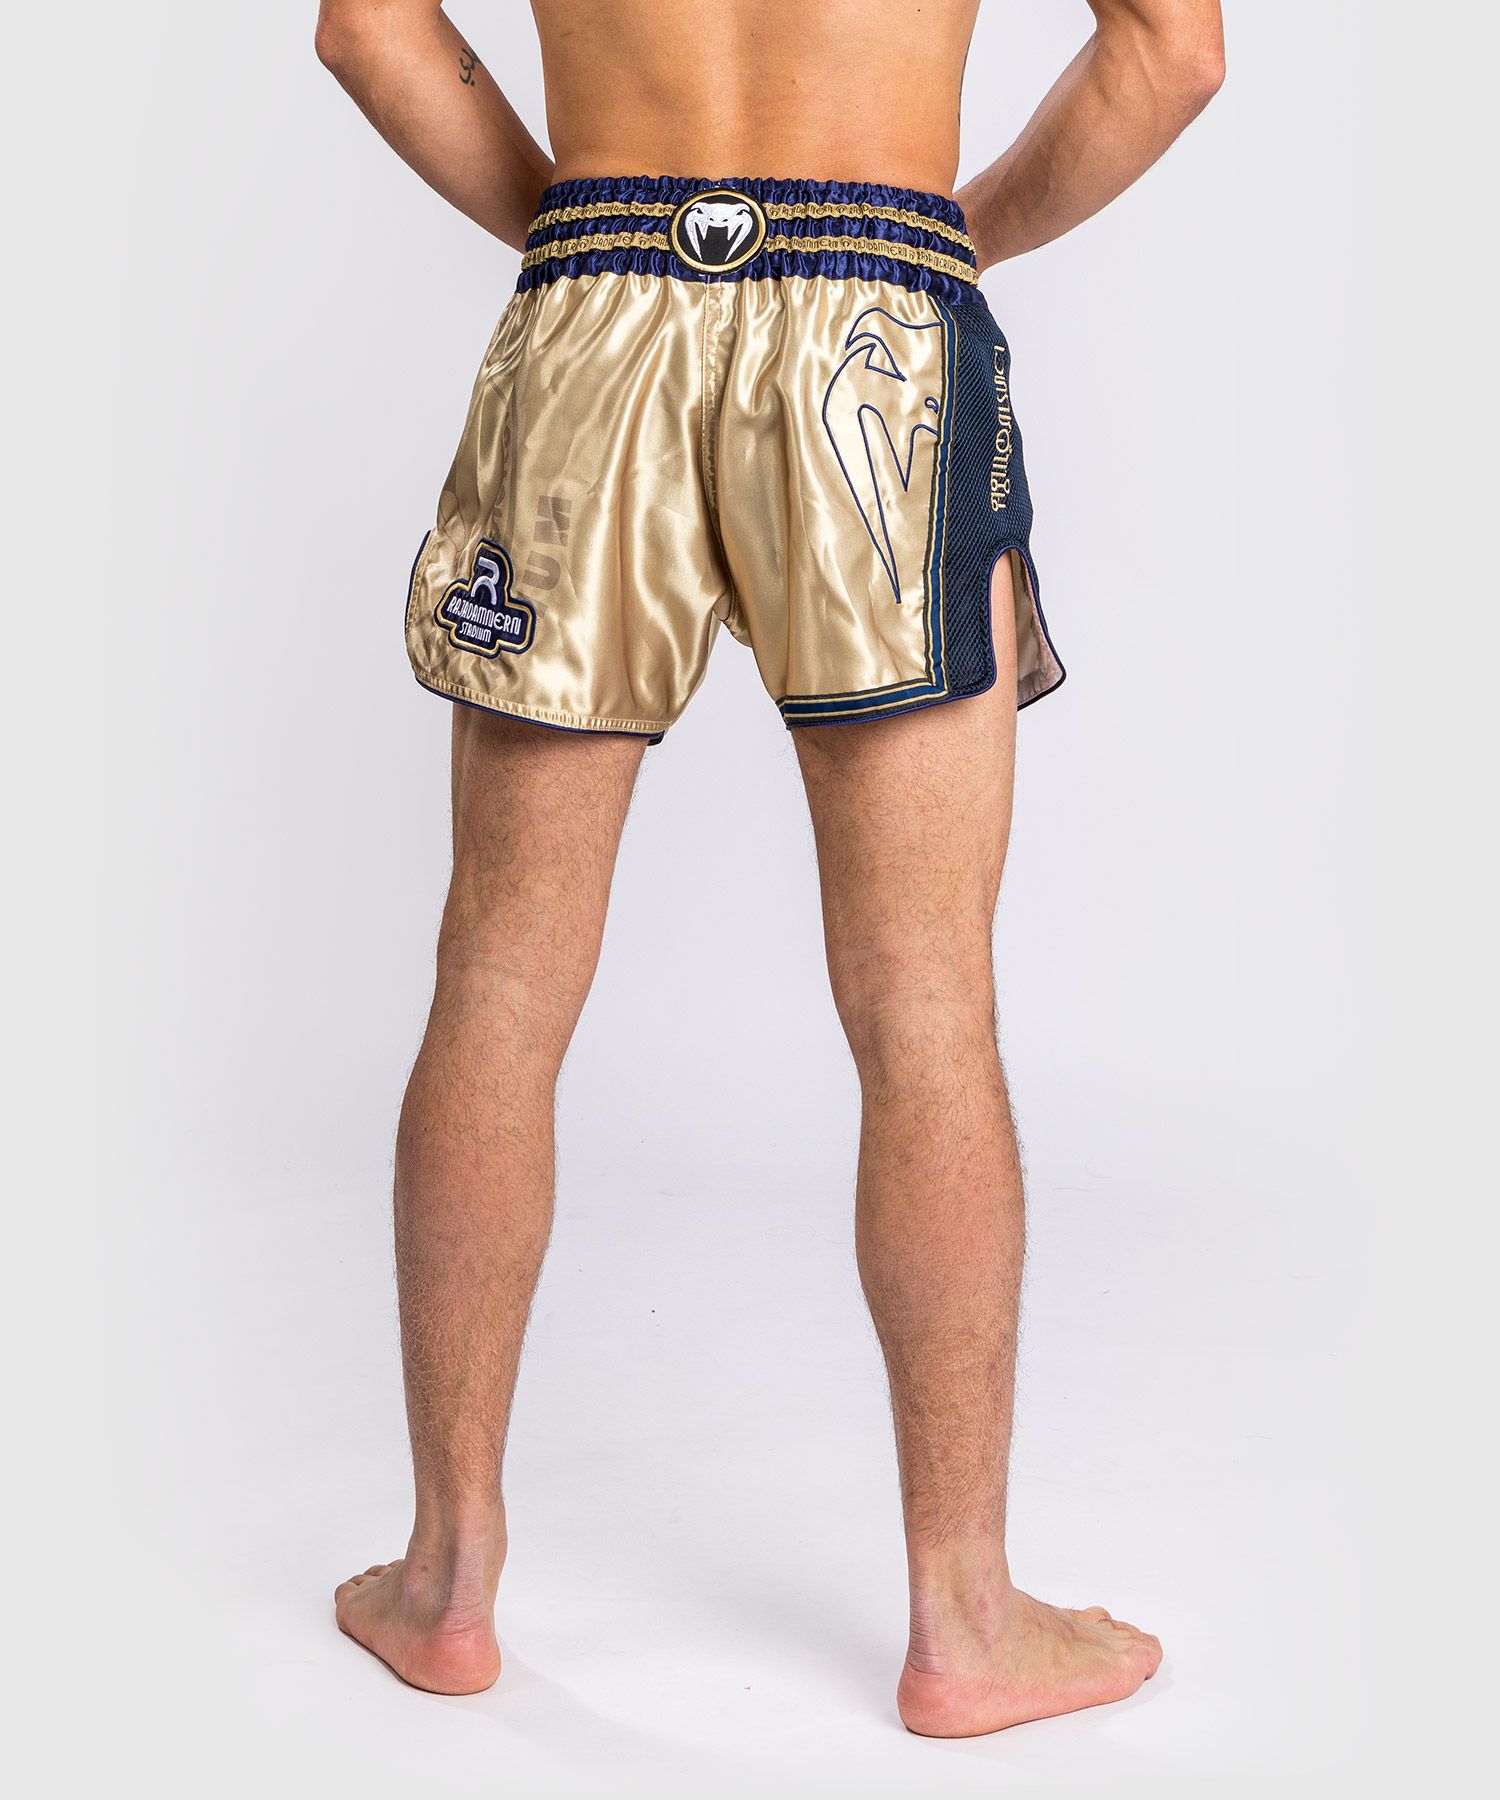 RAJADAMNERN X Venum Muay Thai Shorts - Sand Gold